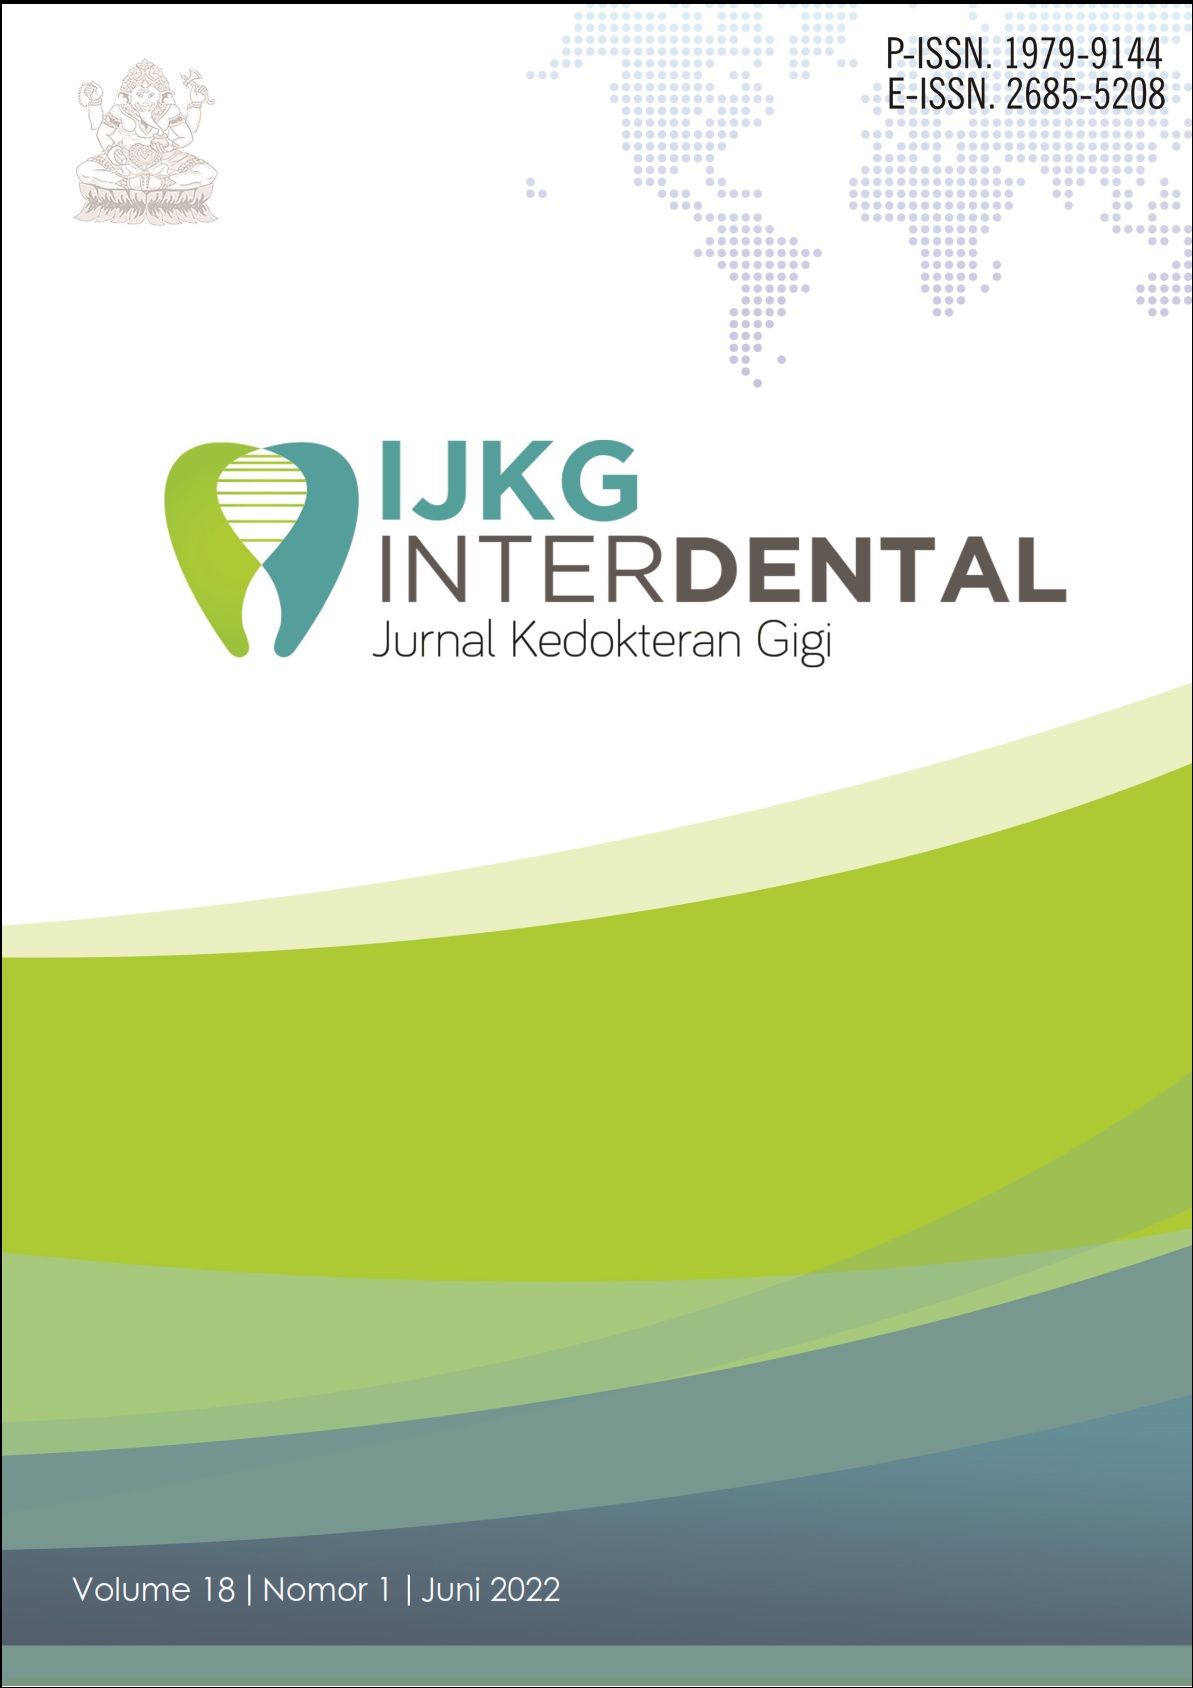 					View Vol. 18 No. 1 (2022): Interdental Jurnal Kedokteran Gigi (IJKG)
				